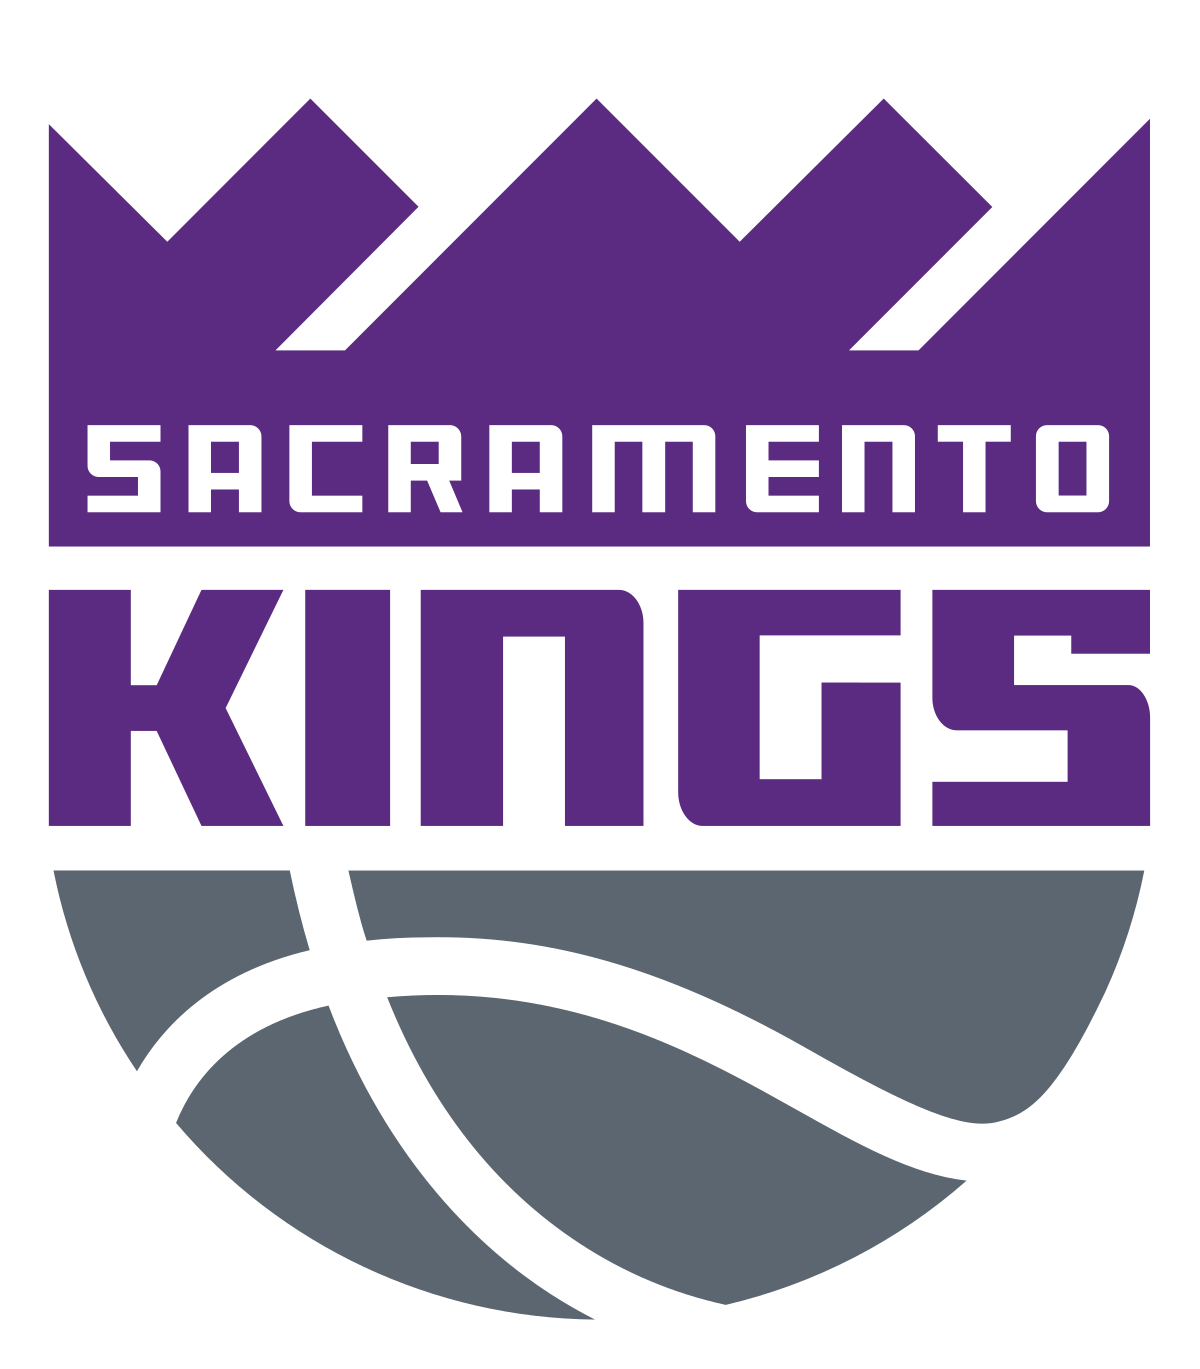 Lines Forming a Blue and White Diamond Logo - Sacramento Kings